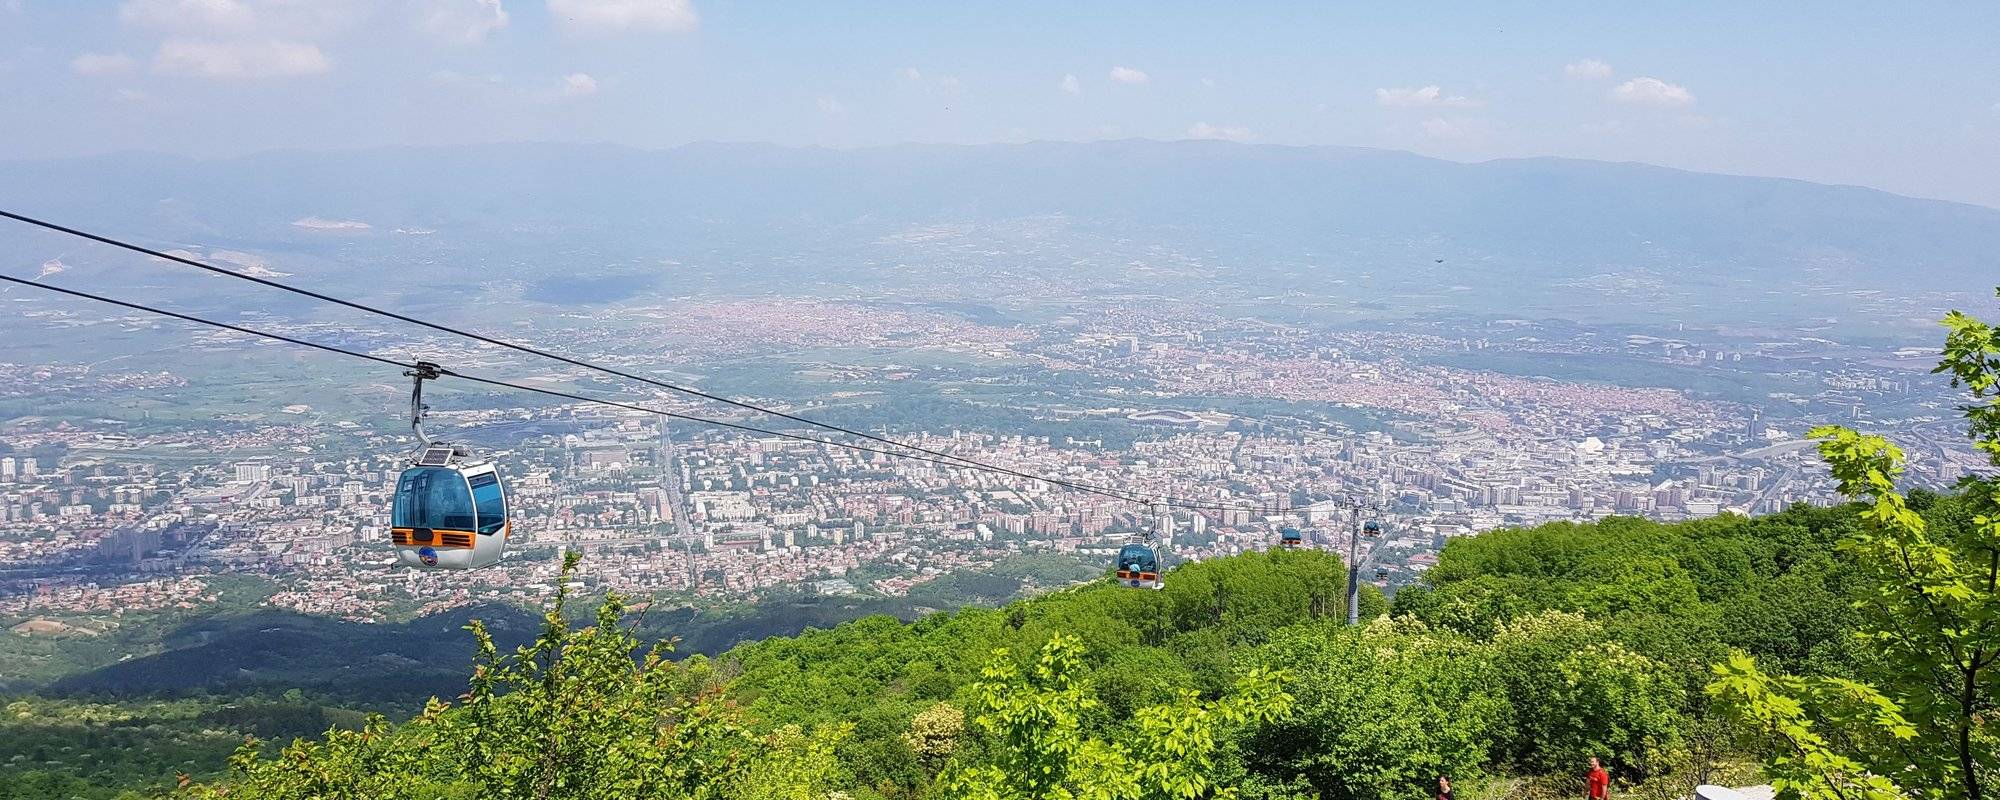 My Balkan-Roadtrip 2018: Matka Canyon & Mount Vodno [EN/DE]